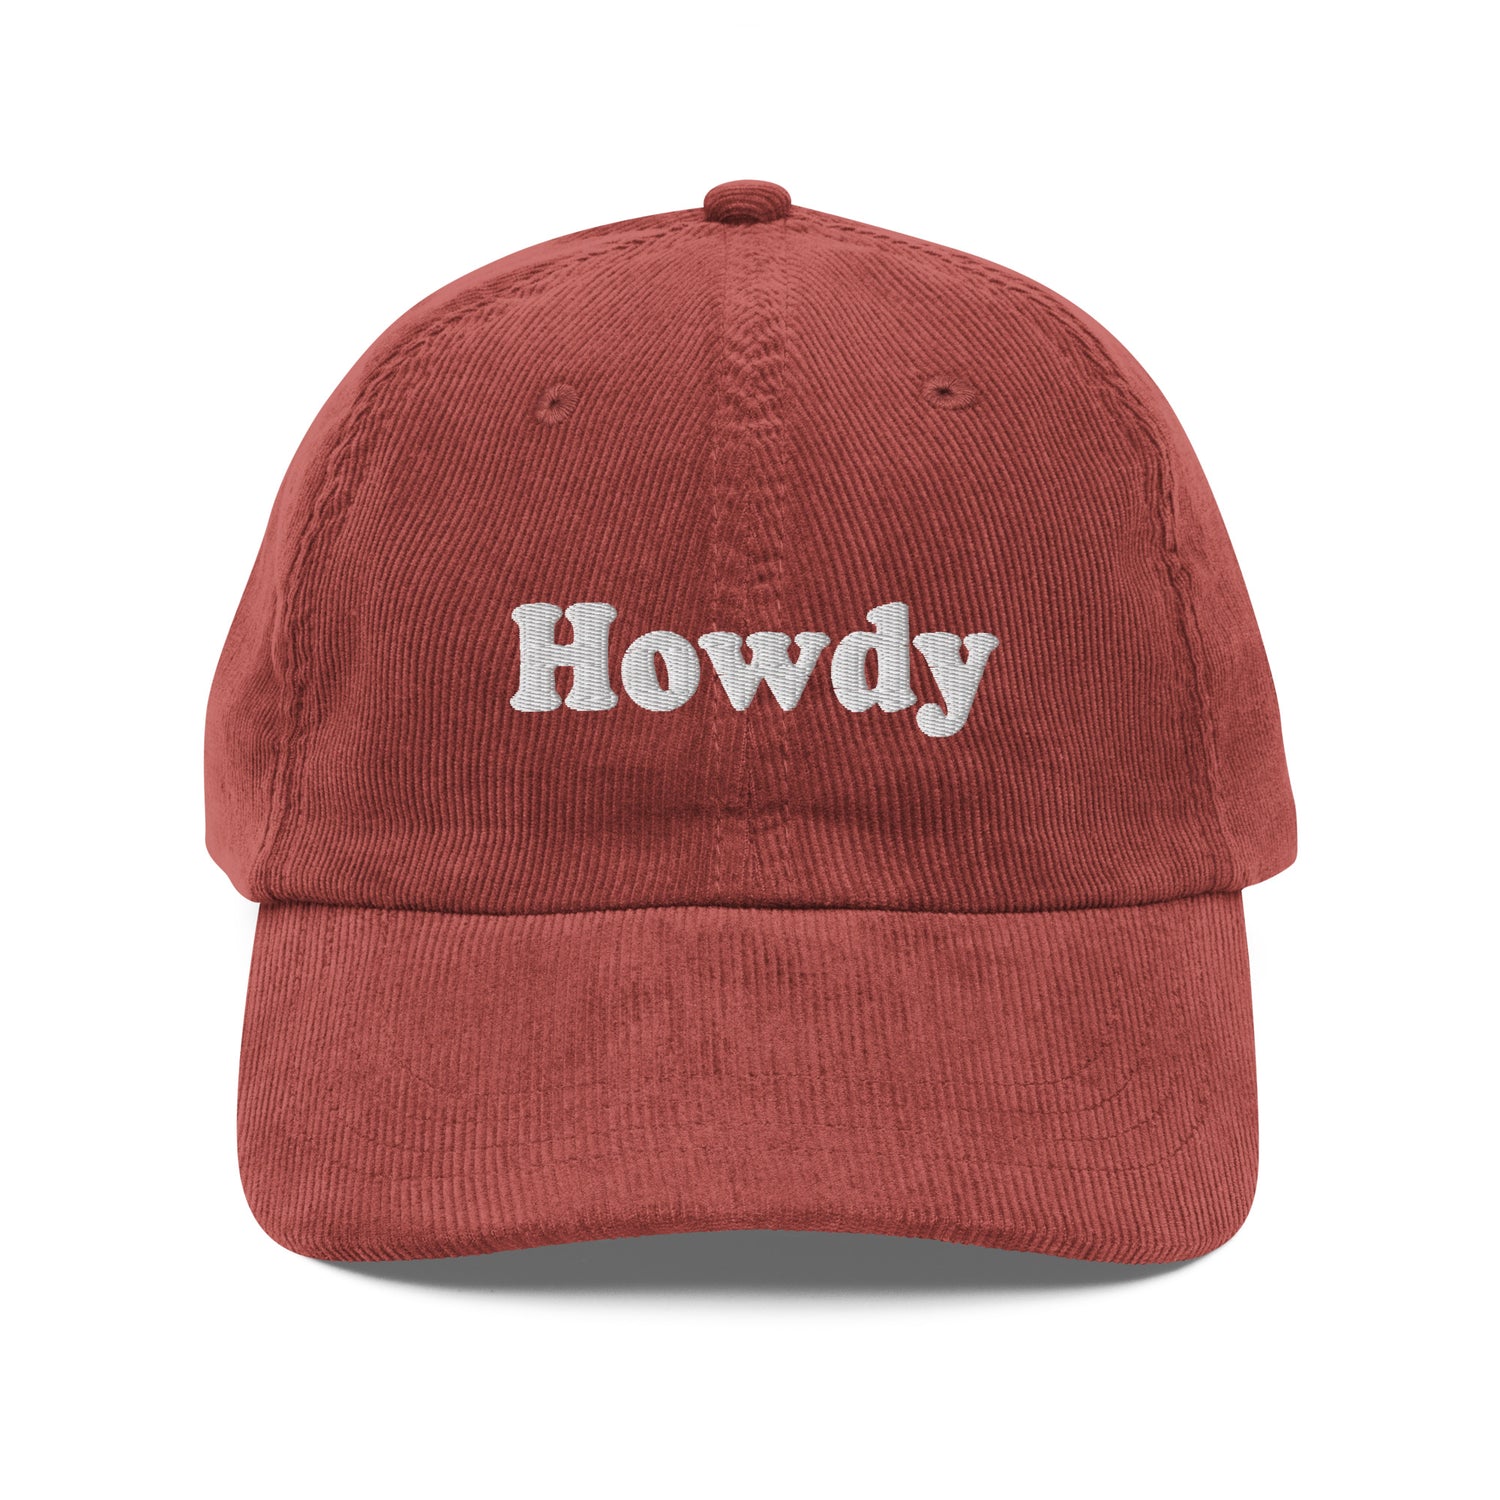 Howdy Corduroy Hat